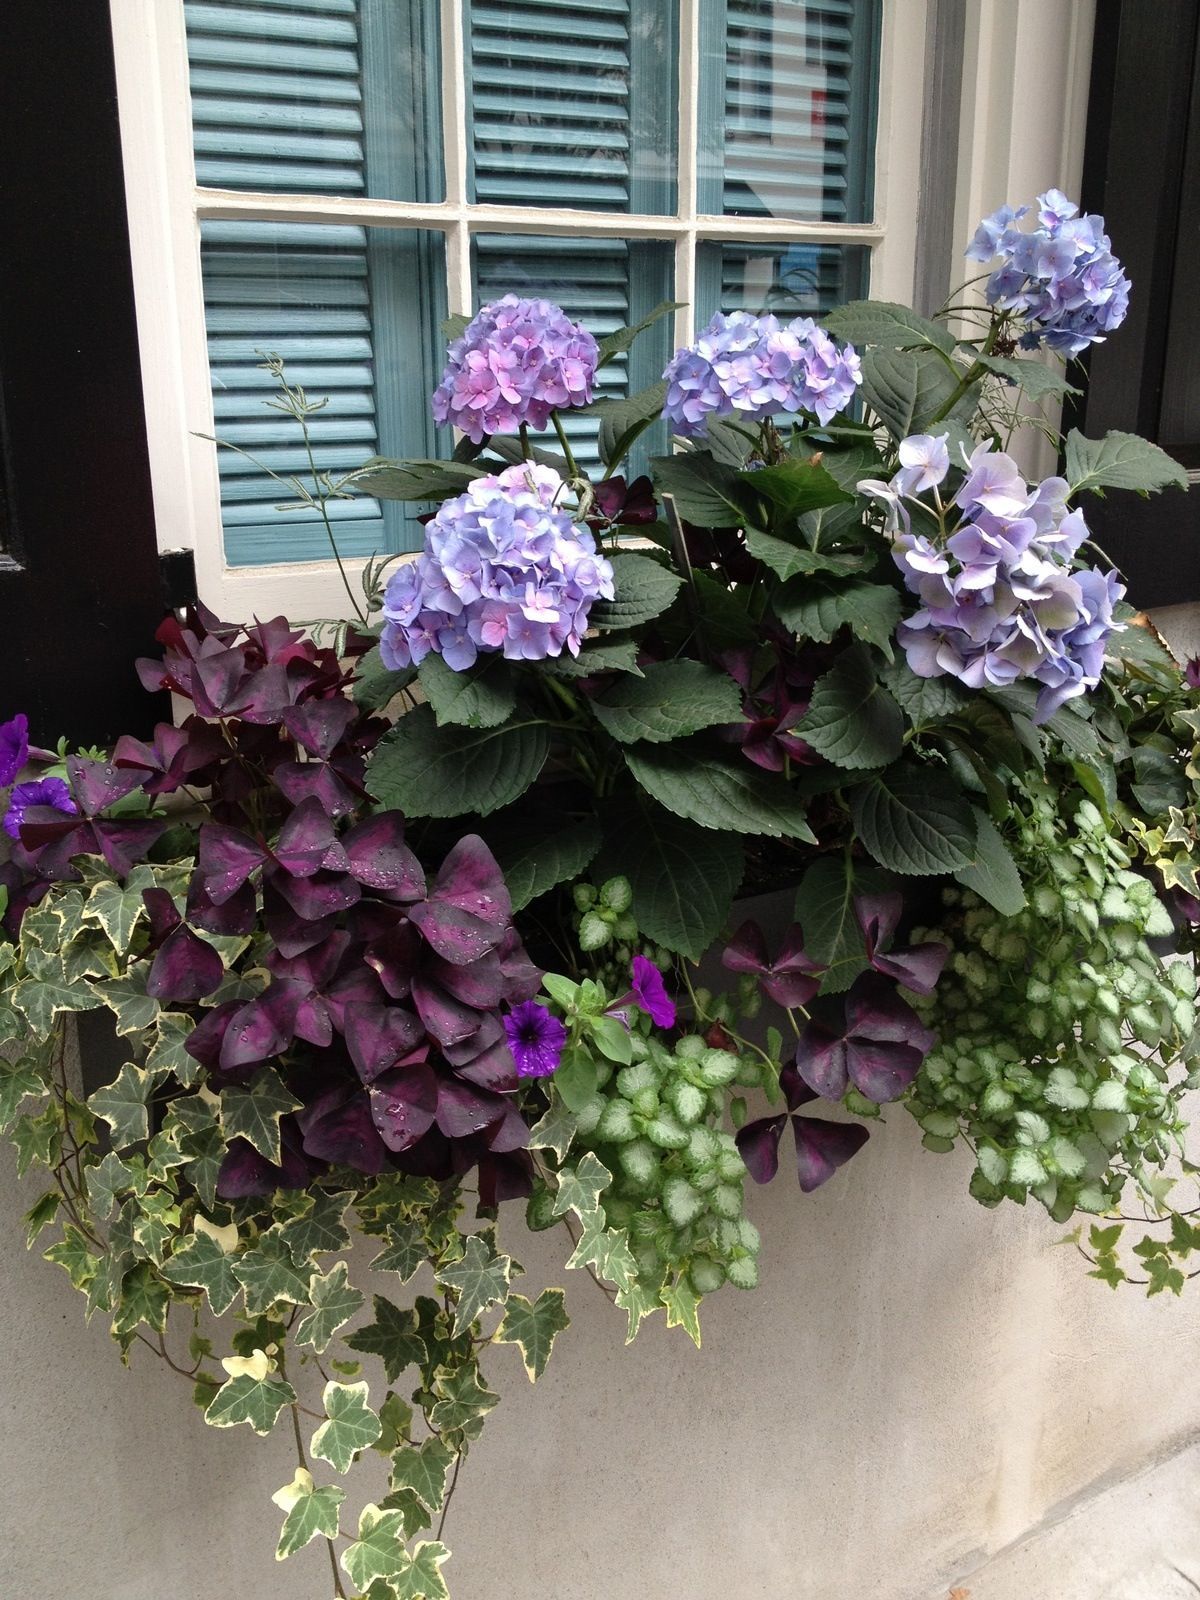 Charleston window box: Blue Hydrangea, Purple Oxalis, Silver Lamium, English Ivy. I am certain those hydrangeas would not feel at